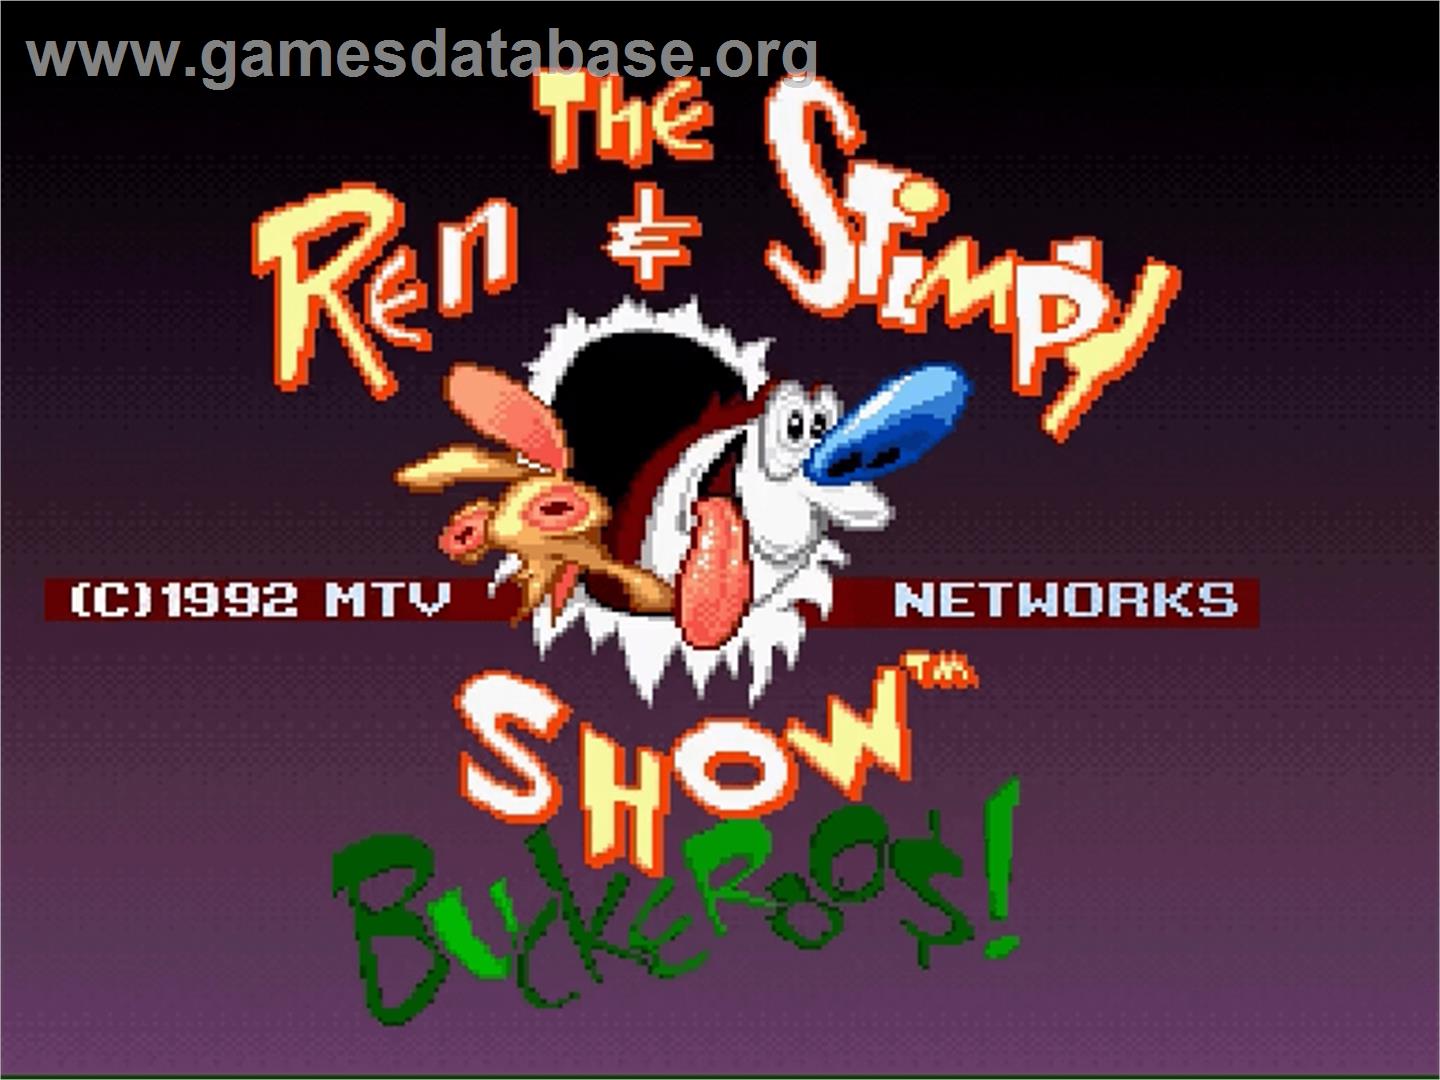 The Ren & Stimpy Show: Buckaroo$! - Nintendo SNES - Artwork - Title Screen